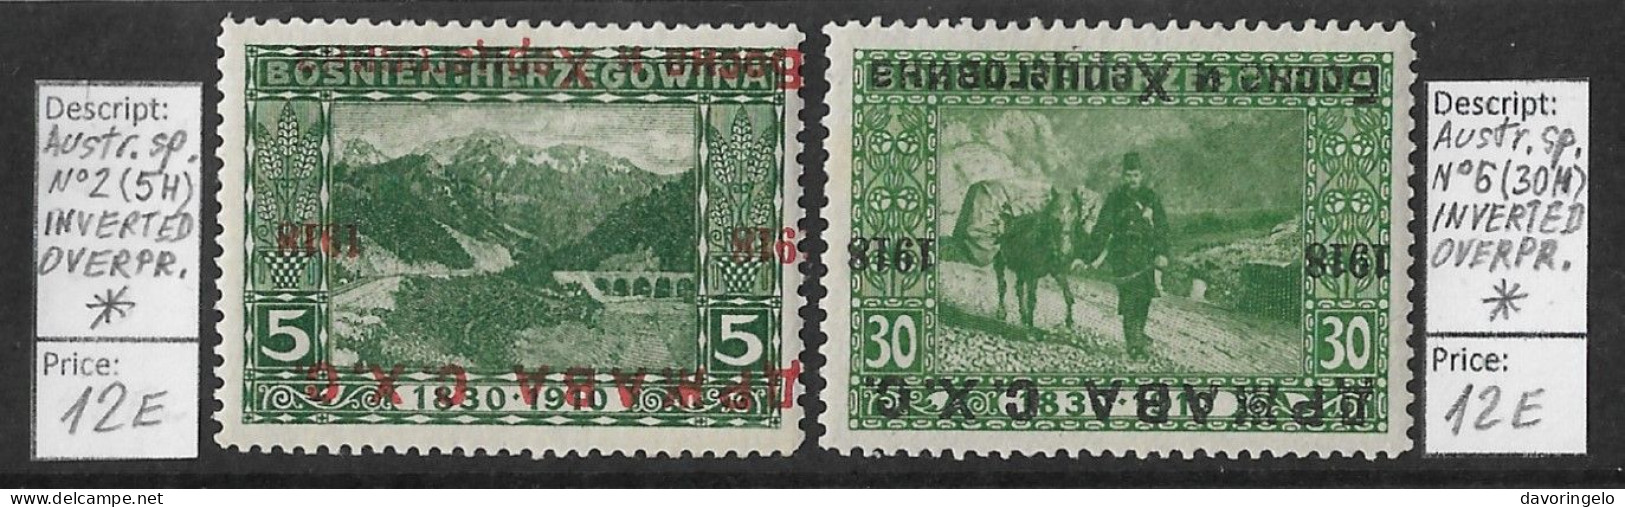 Bosnia-Herzegovina/Yugoslavia/SHS, 1918 Year, Austr. Sp. No 2 (5H) & No 6 (30H), INVERTED OVERPRINT, (*) - Bosnien-Herzegowina